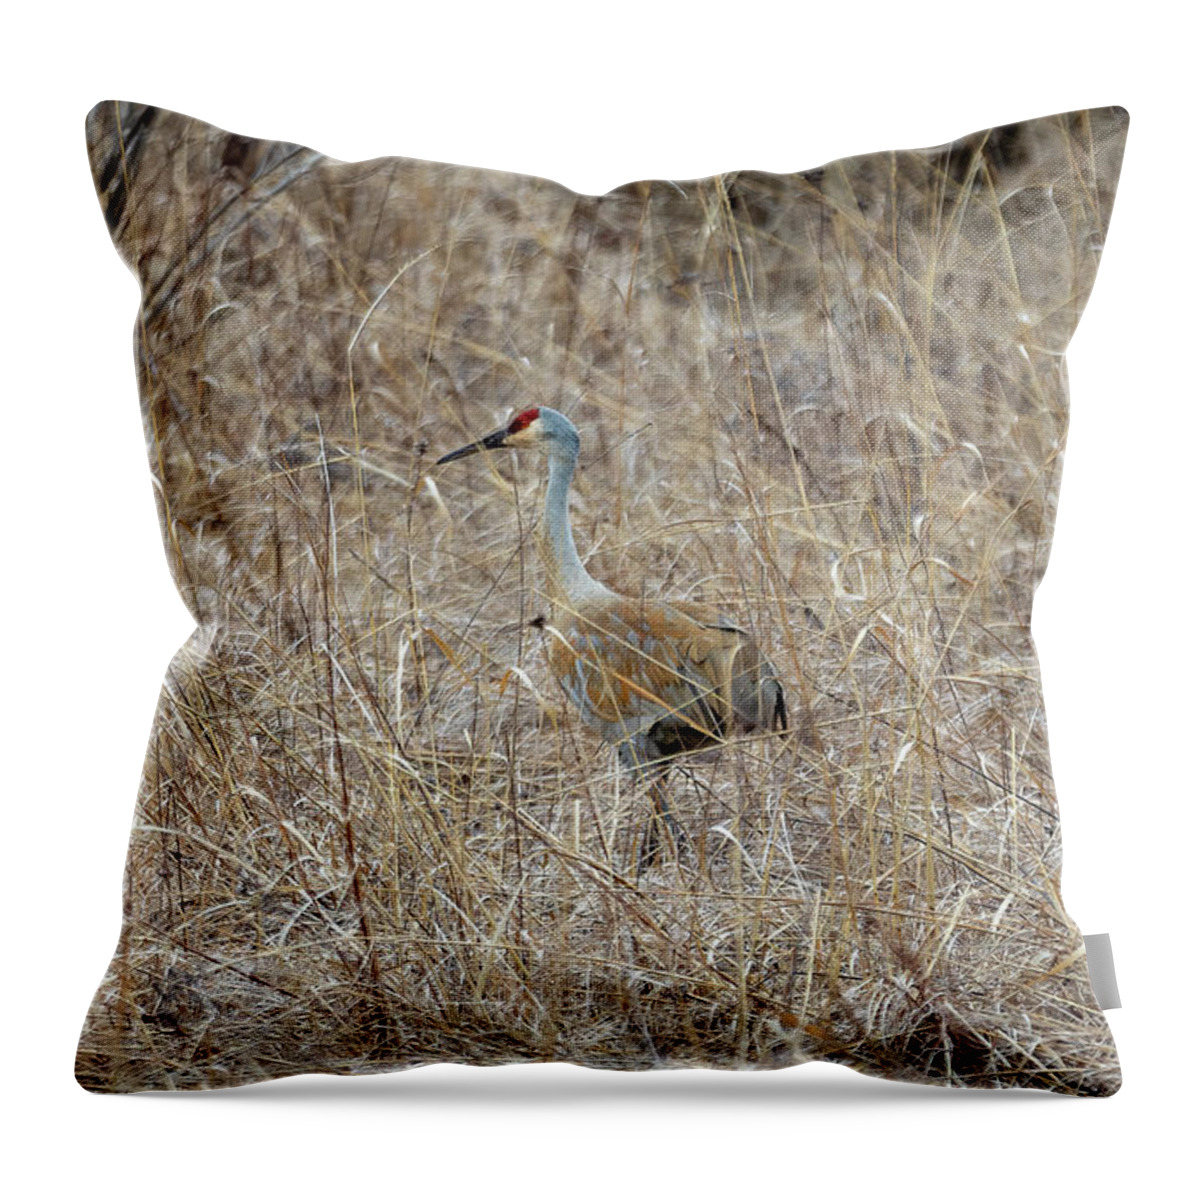 Sandhill Crane Throw Pillow featuring the photograph Sandhill Crane by Josh Bryant